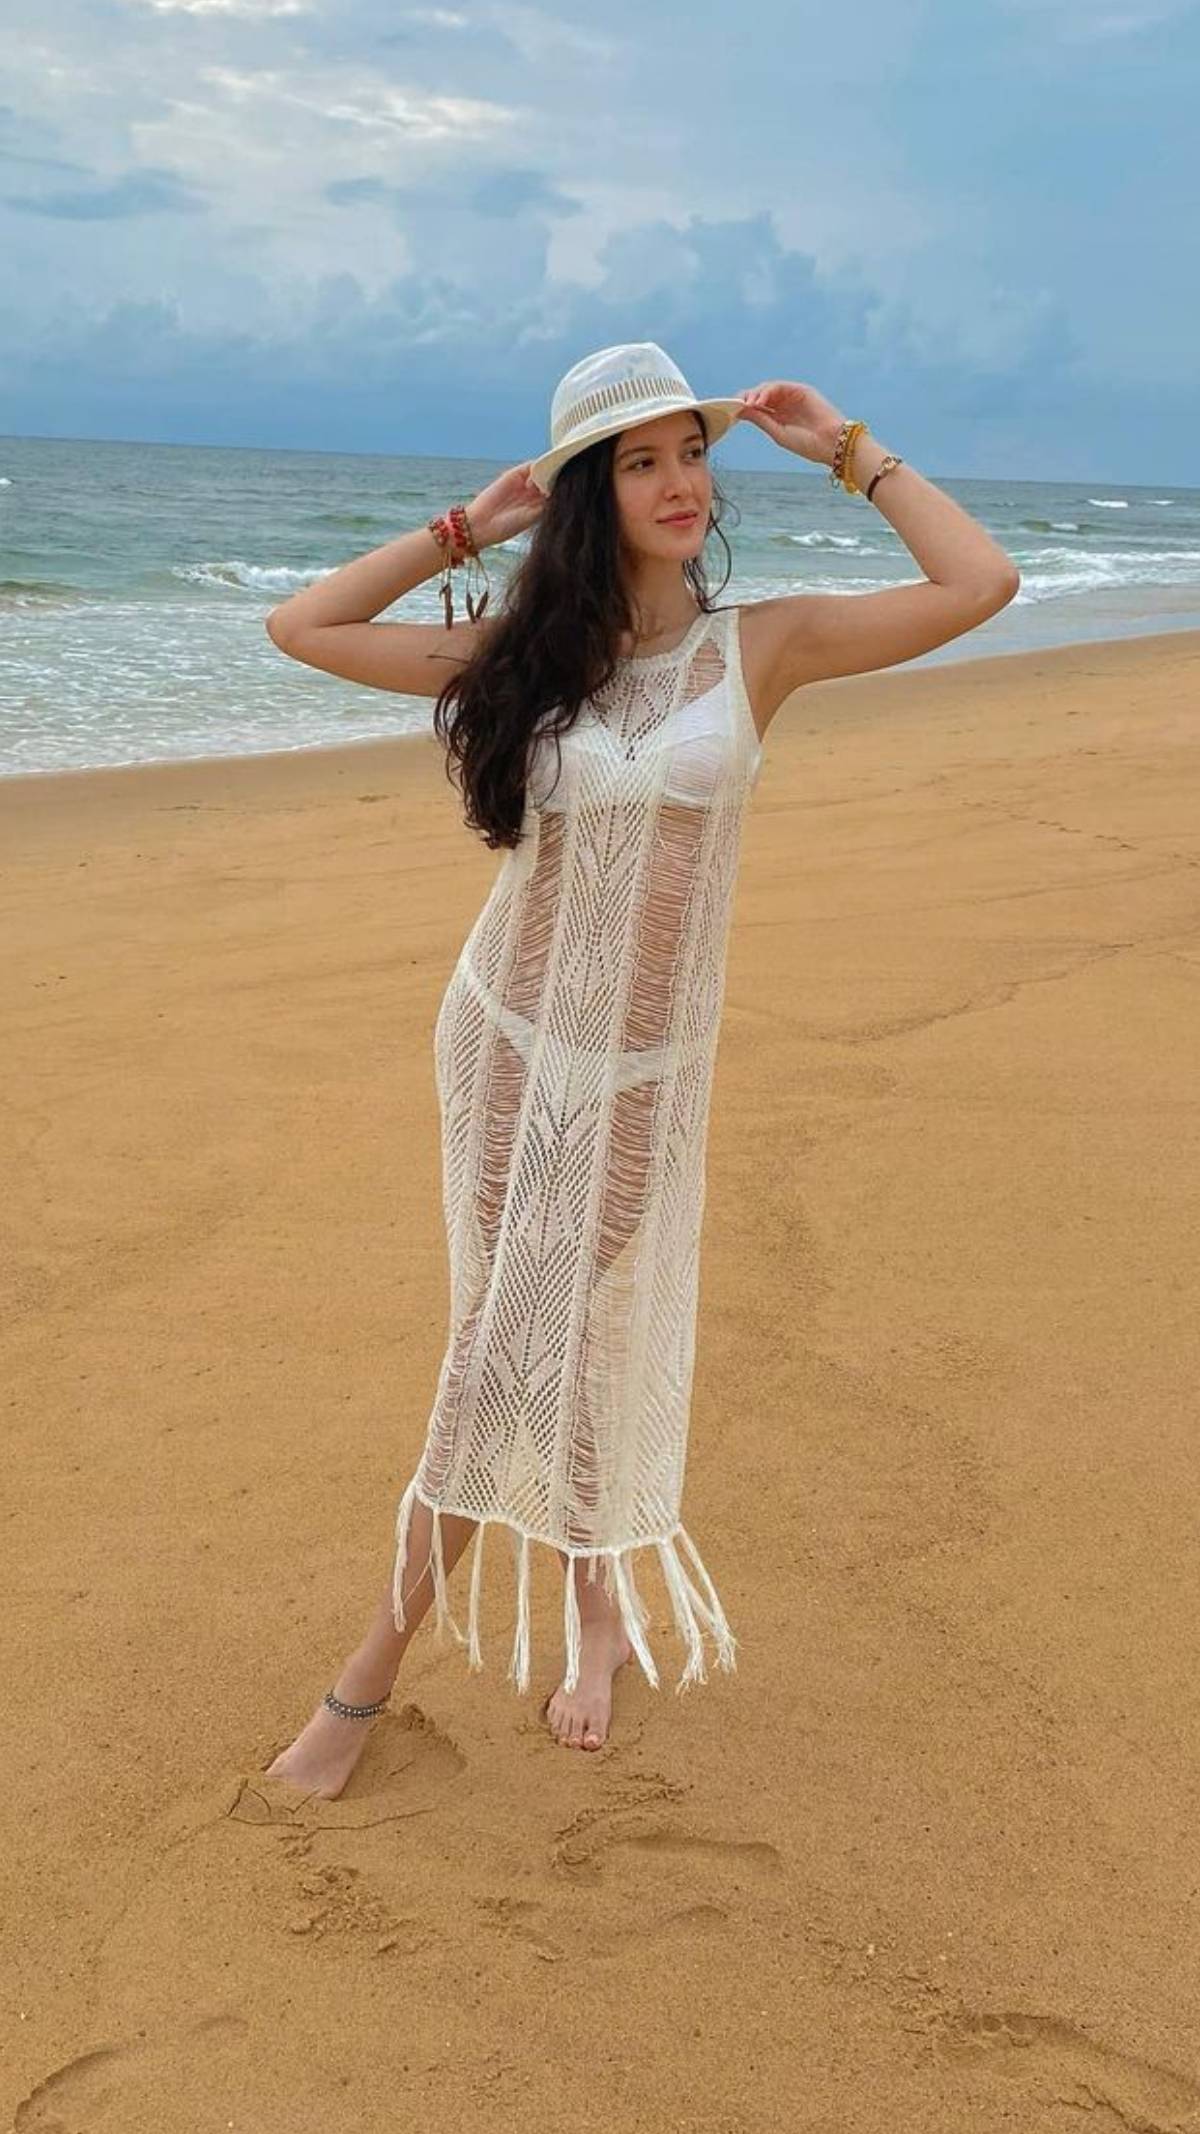 Shanaya Kapoor looks super sexy in the white bikini and the lace overlay